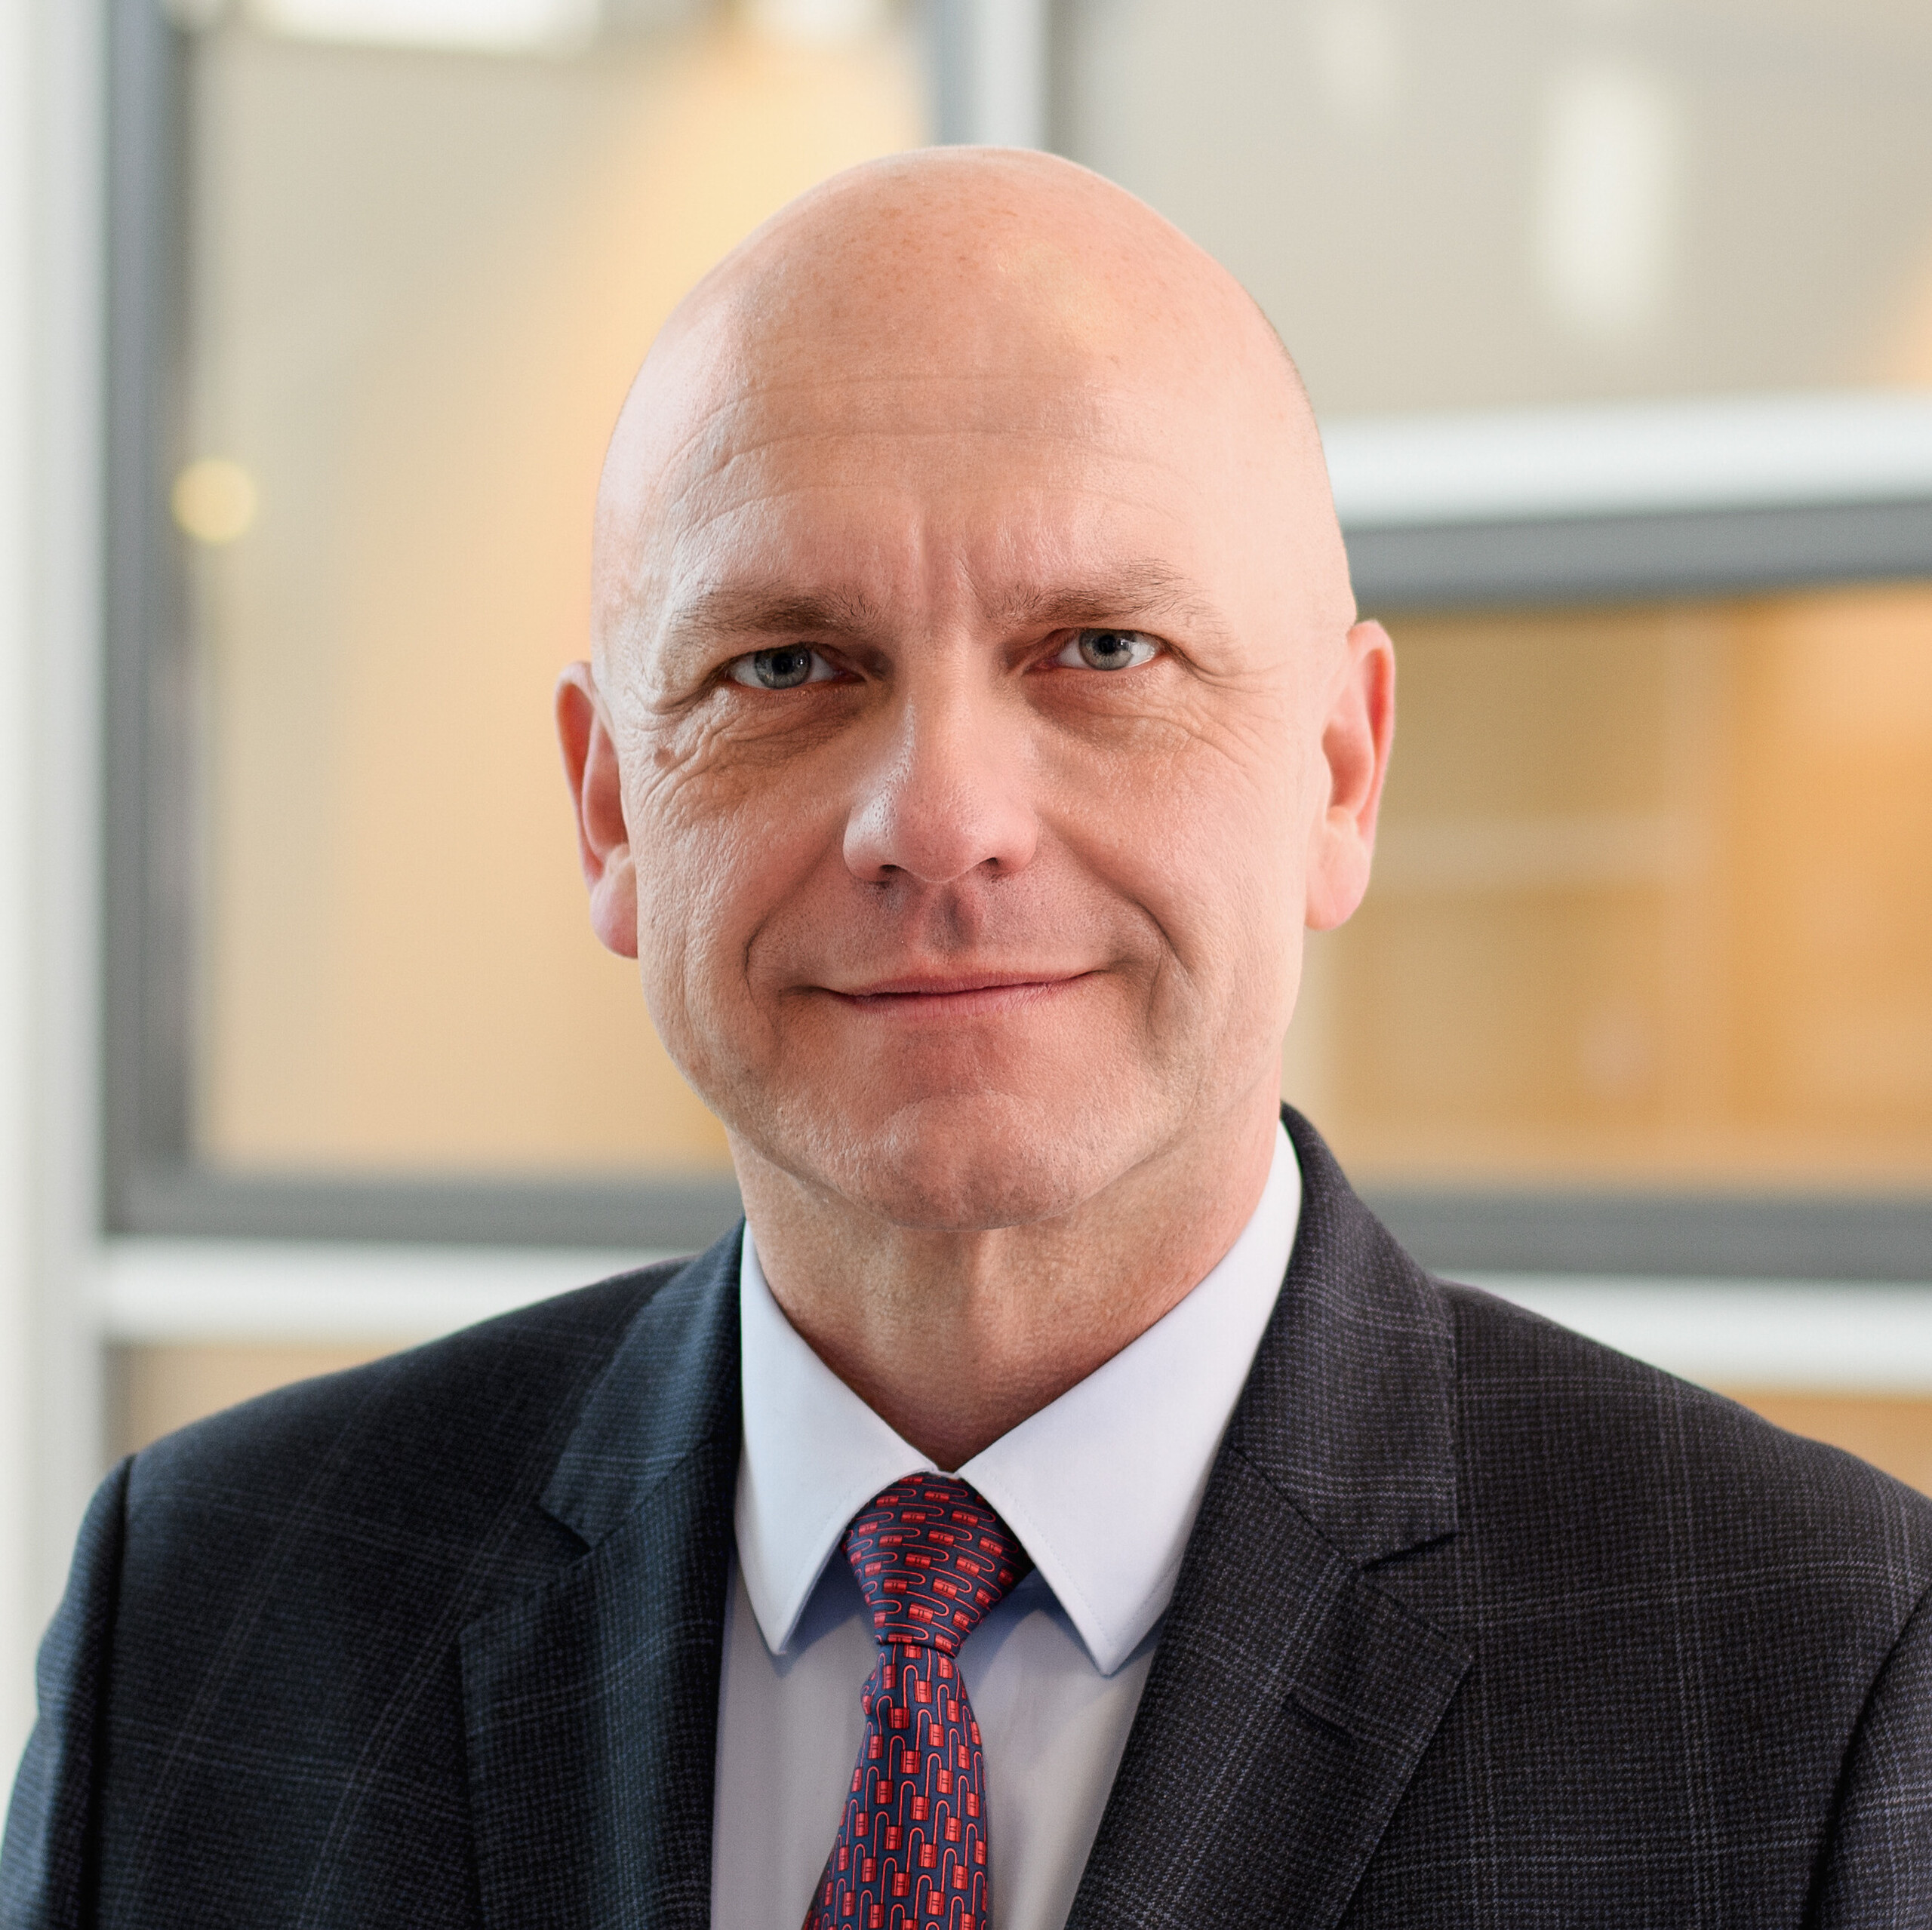 Alexander Gebauer, Chief Executive Officer for Allianz Real Estate West Europe